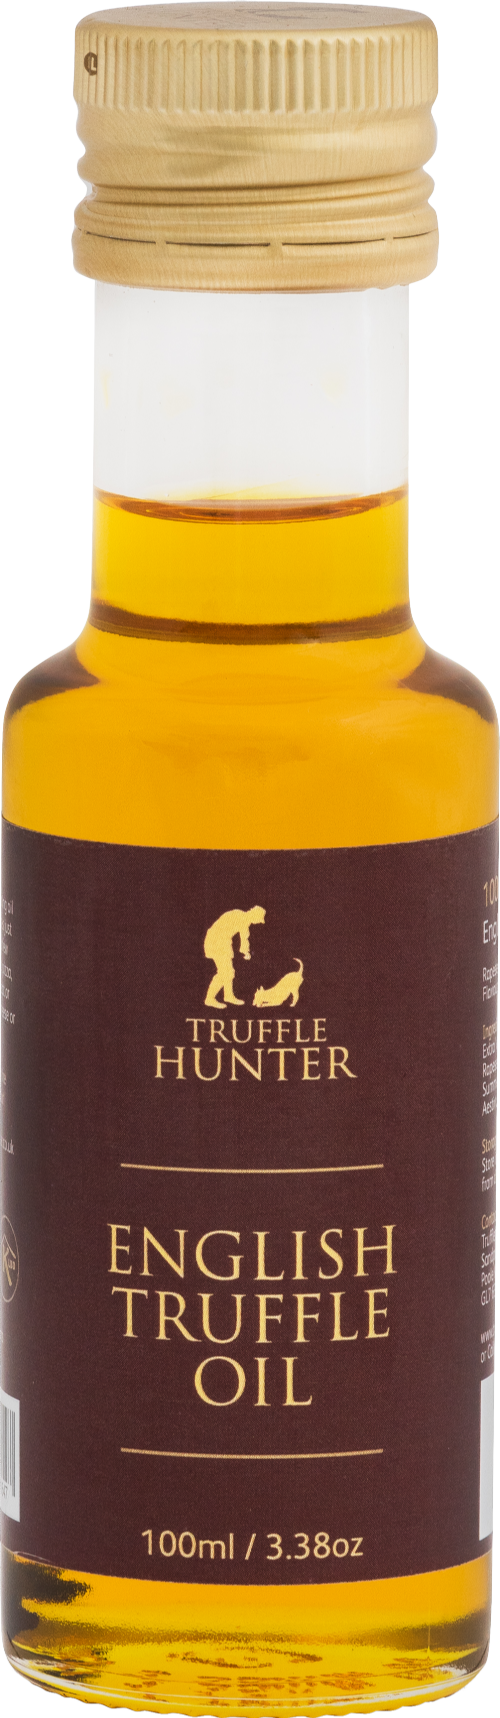 TRUFFLE HUNTER English Truffle Oil 100ml